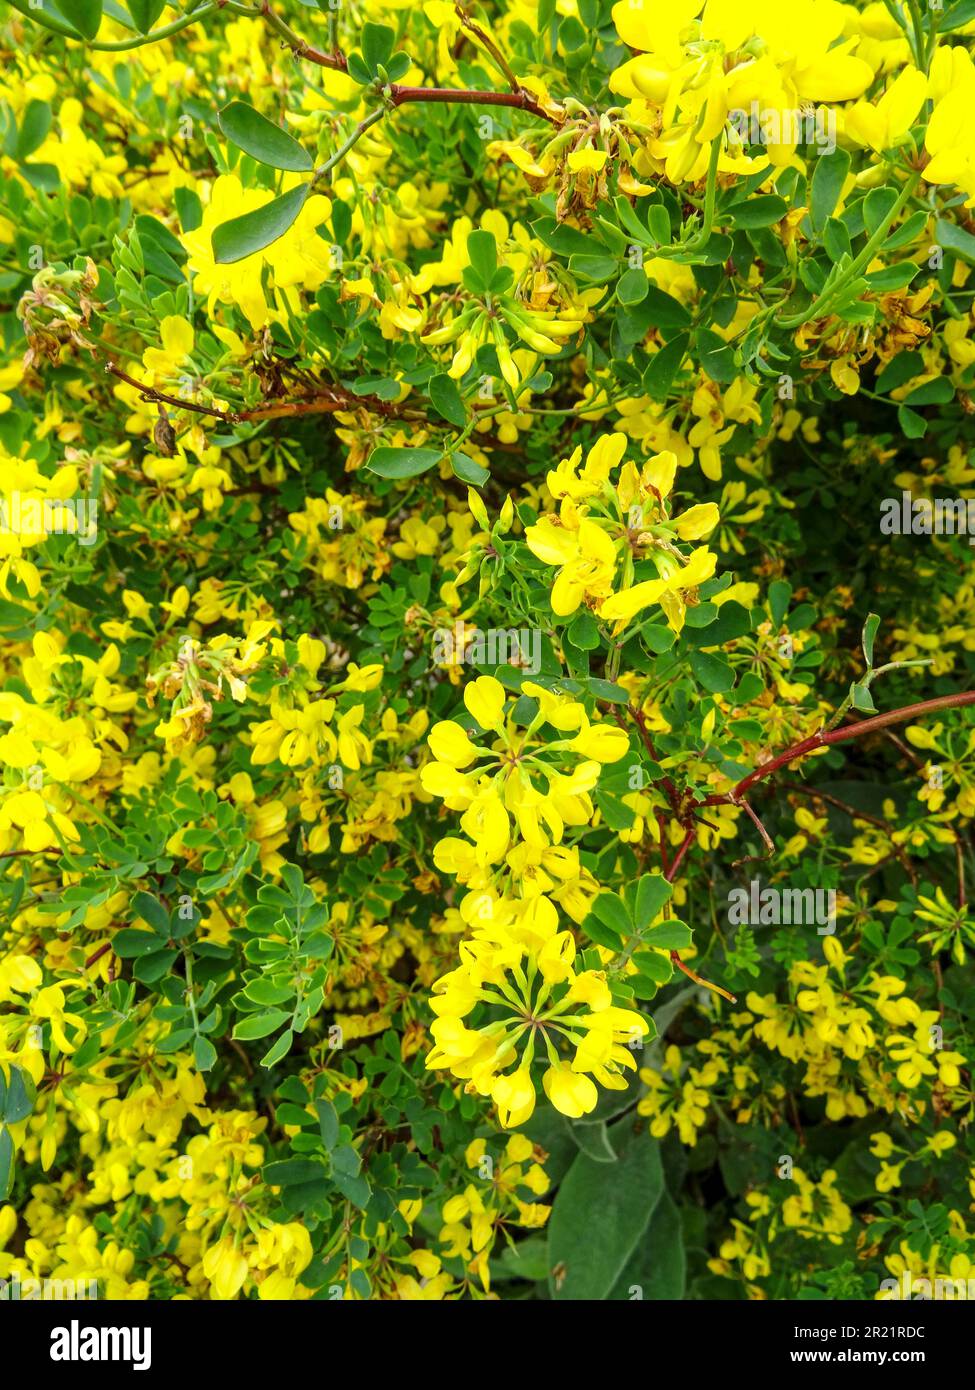 Brilliant Coronilla valentina subsp. Glauca,flowering in spring sunshine. Natural close up environmental plant portrait Stock Photo